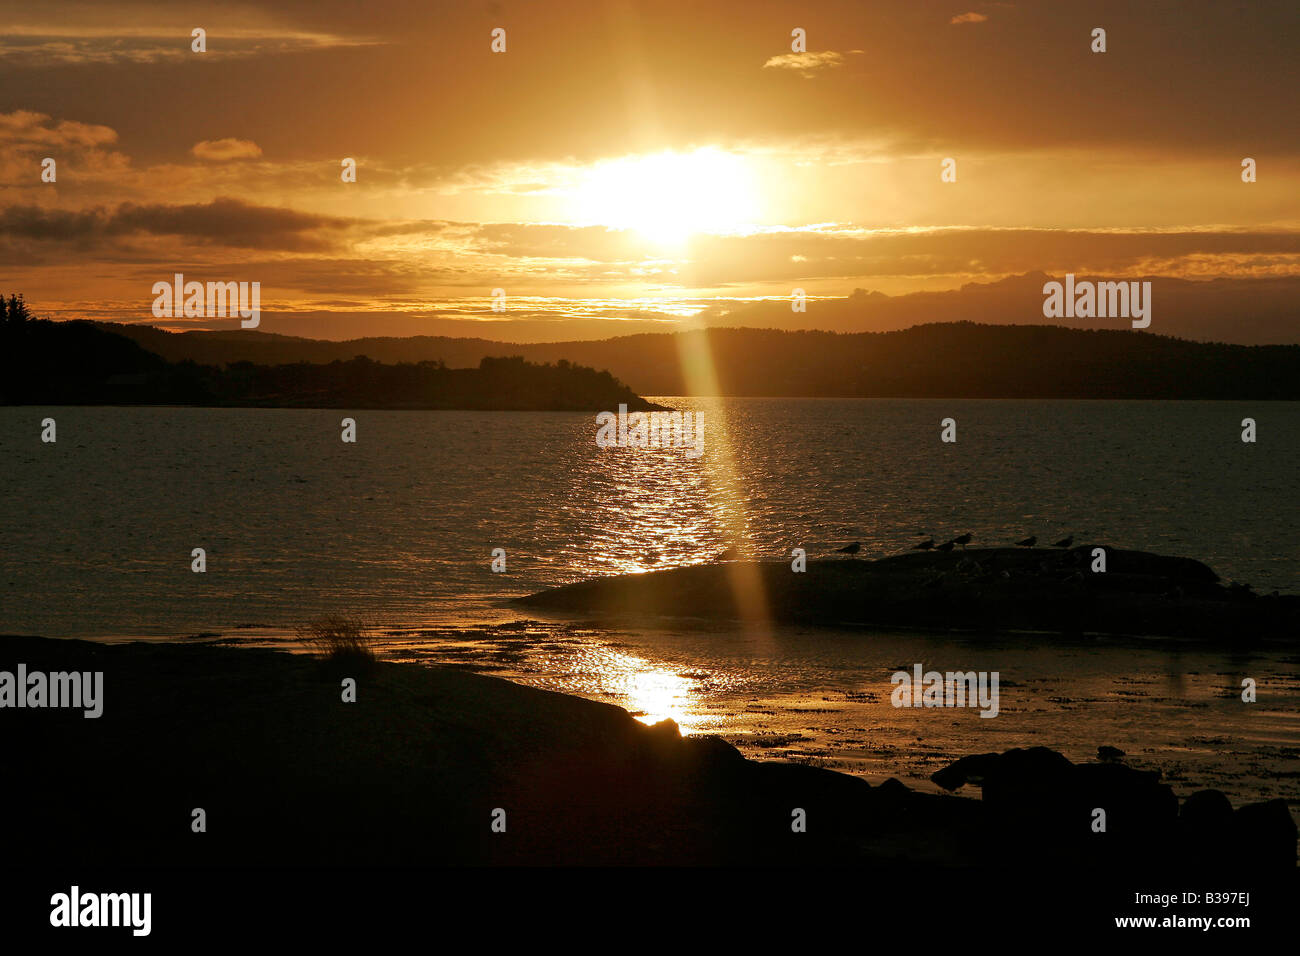 Norwegen, Sonnenuntergang vor der Insel Hitra, Norway sundown at Hitra island Stock Photo